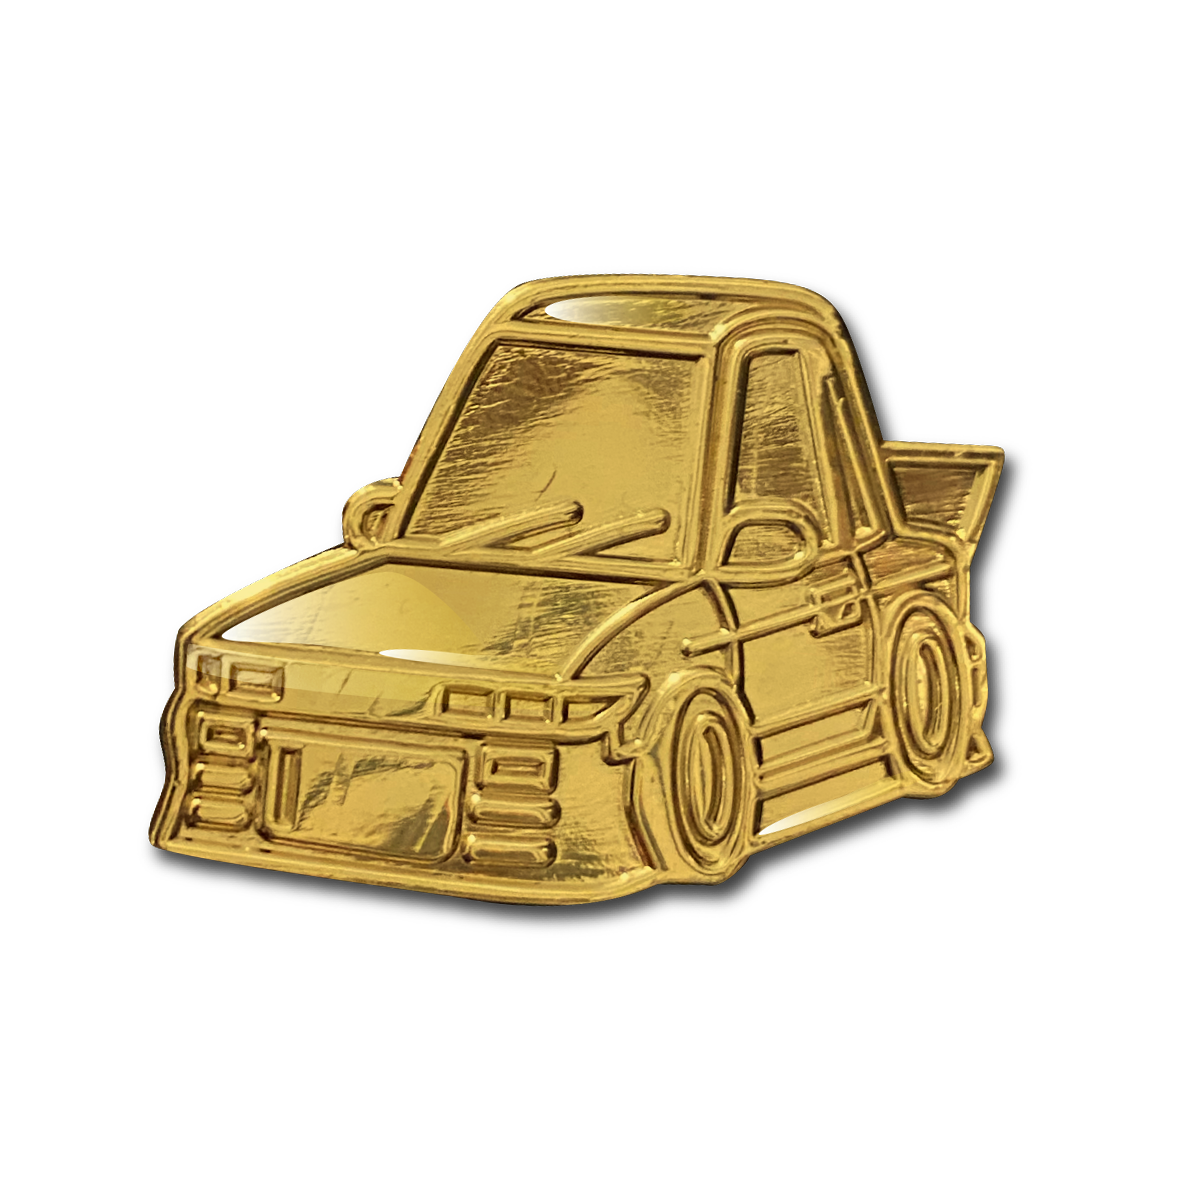 Golden S13 Metal Collectible Pin